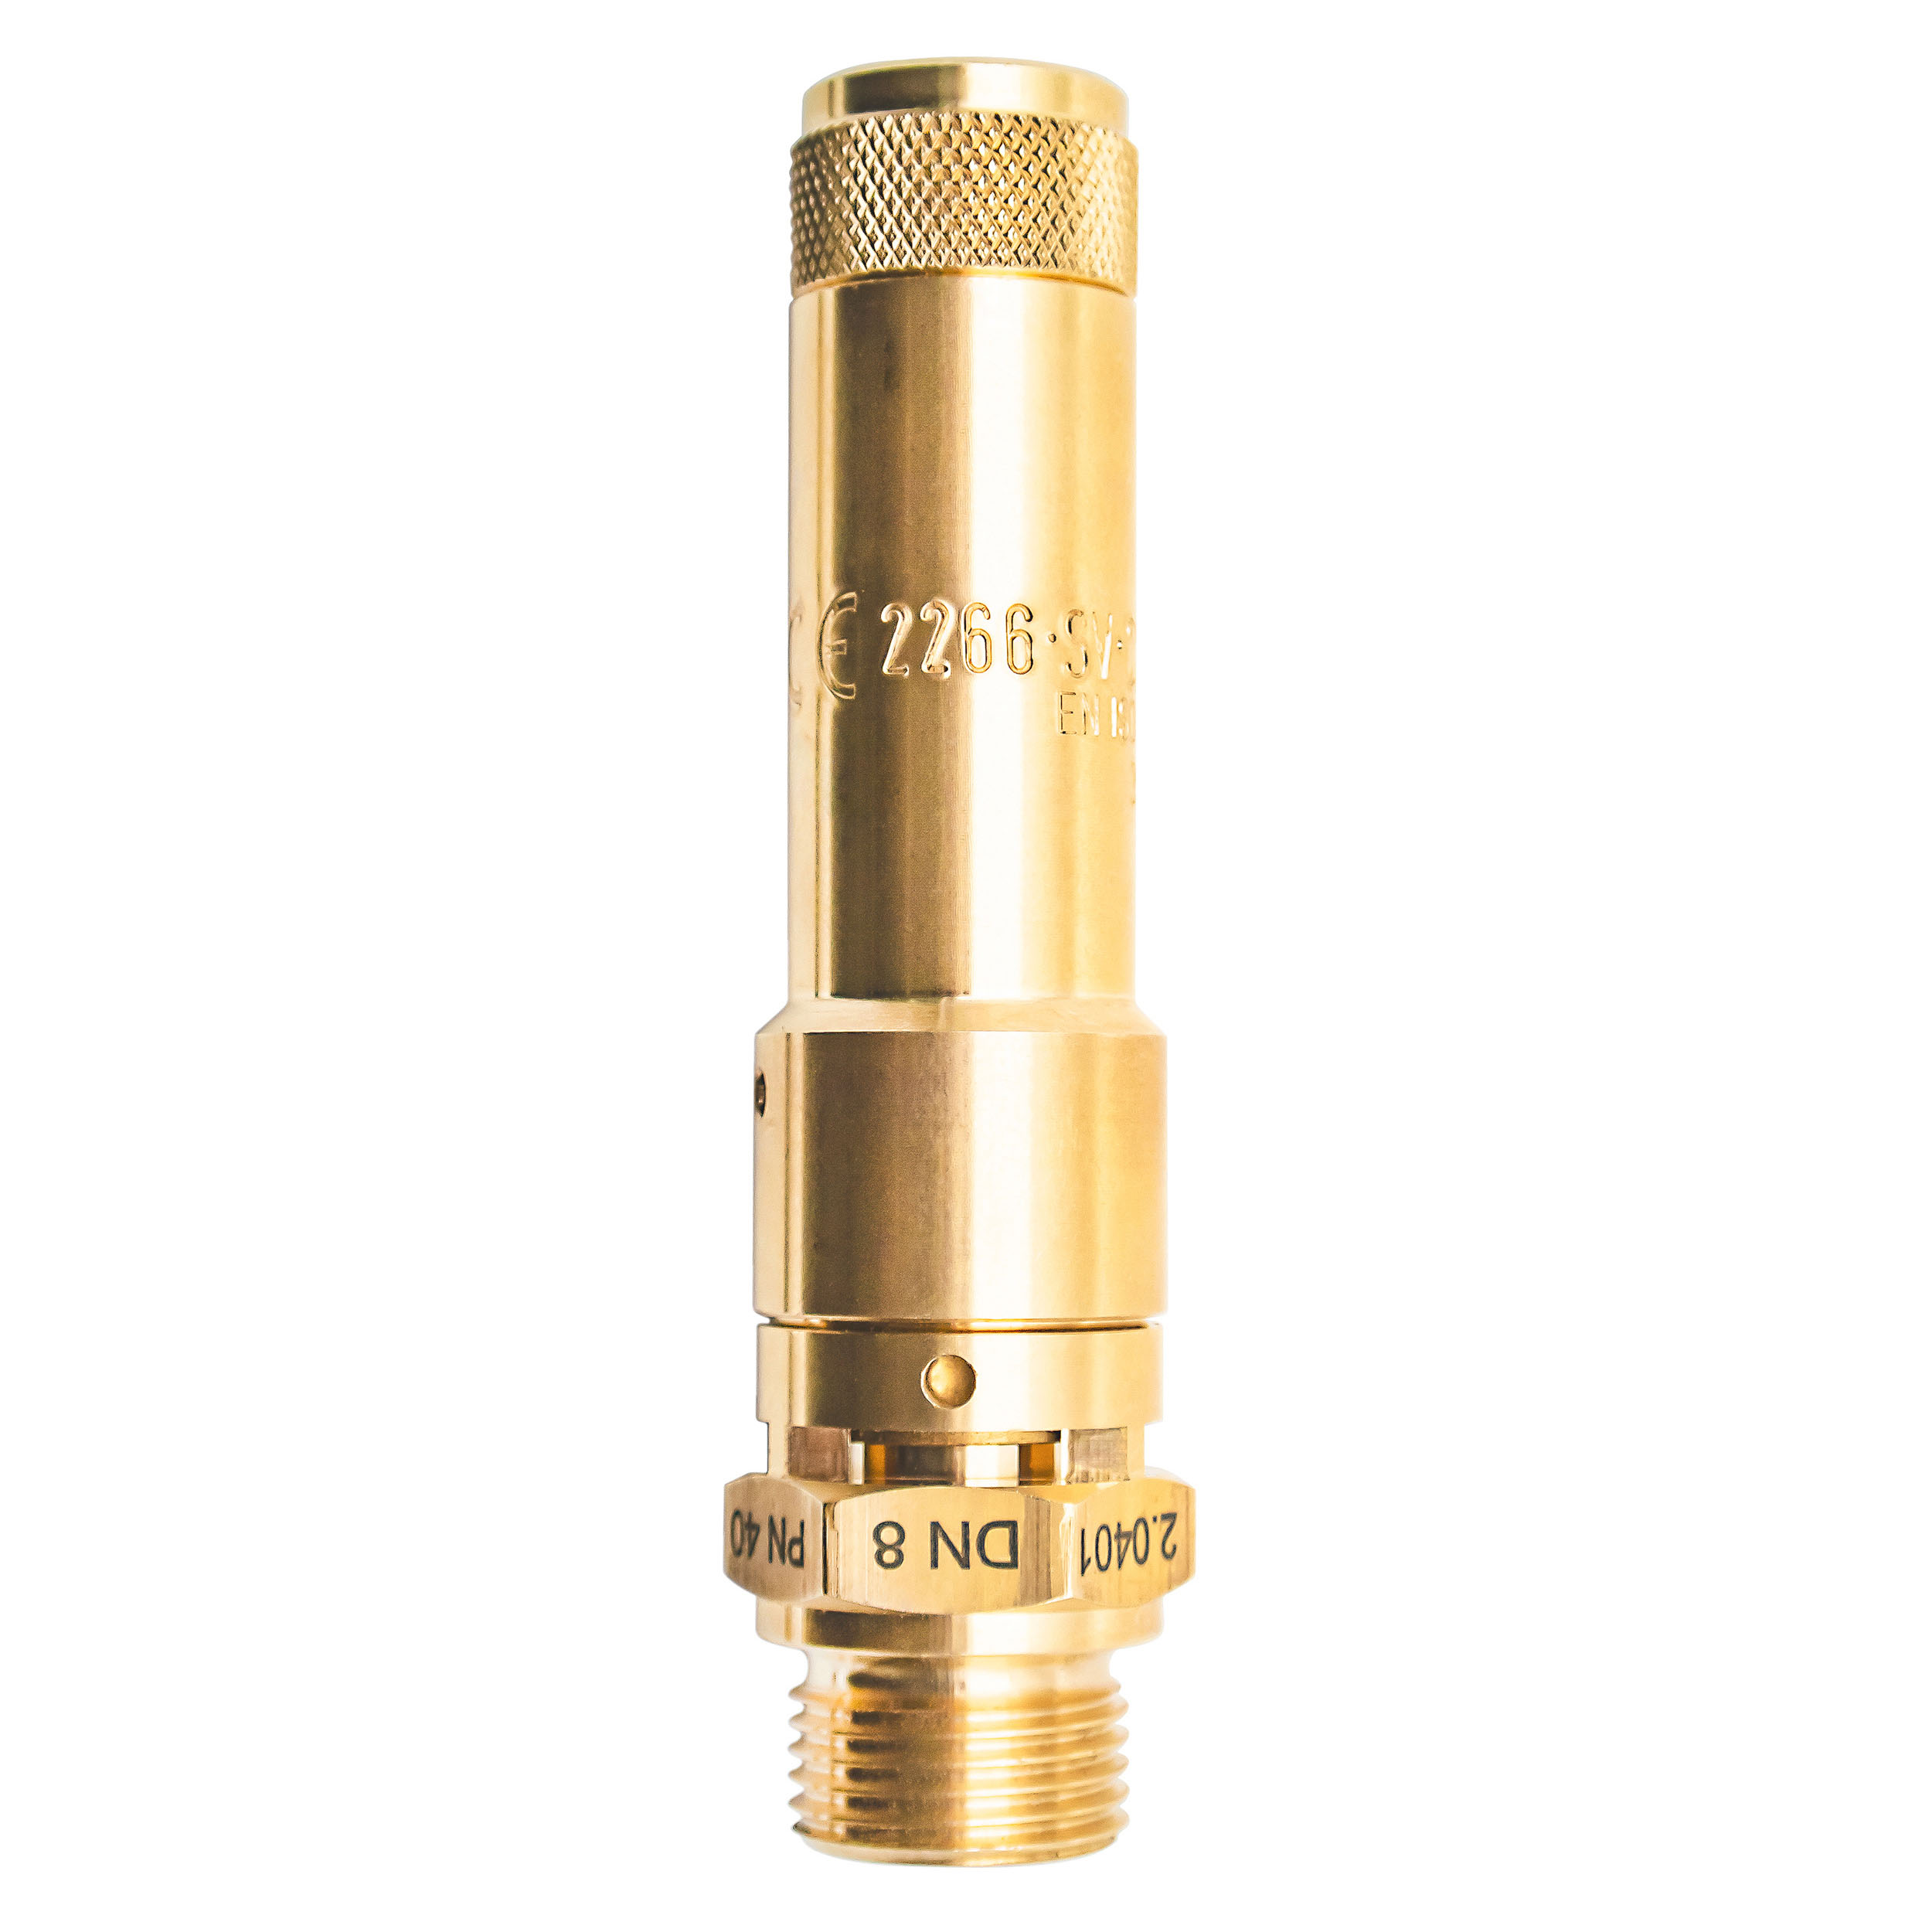 Savety valve component tested DN 8, G⅜, set pressure: 19.9 bar (288,55 psi)